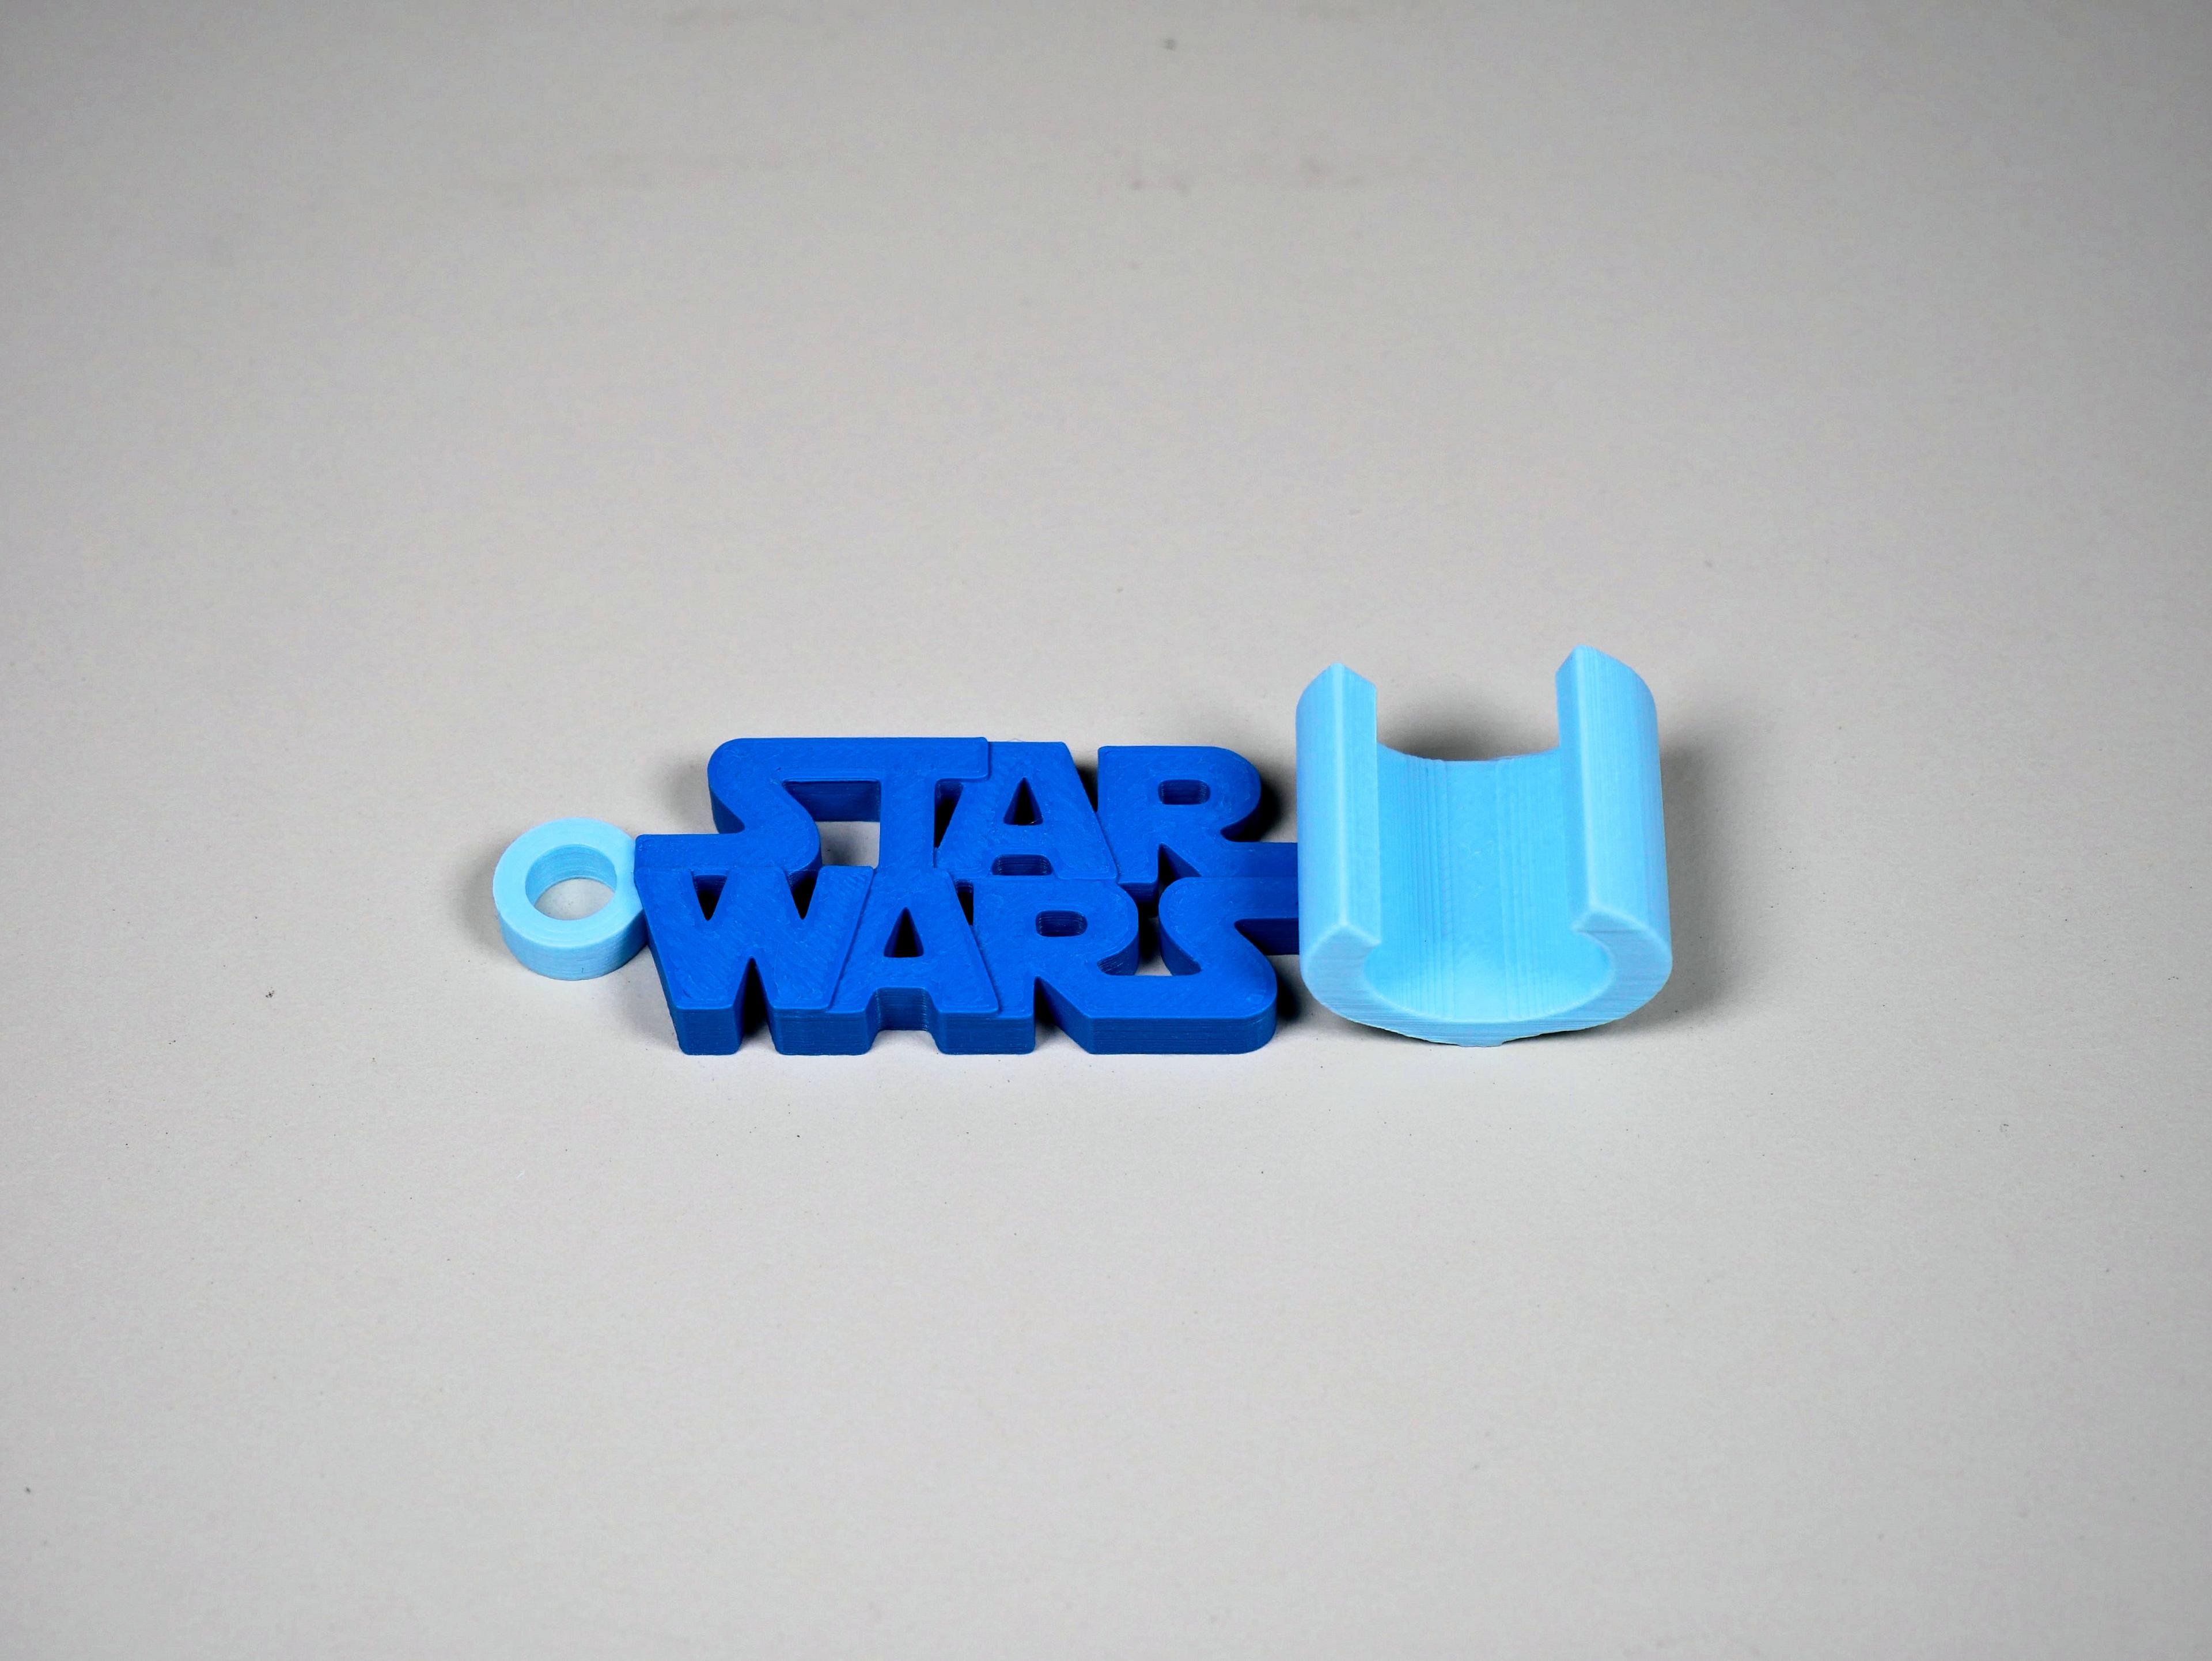 Star Wars keychain phone stand 3d model